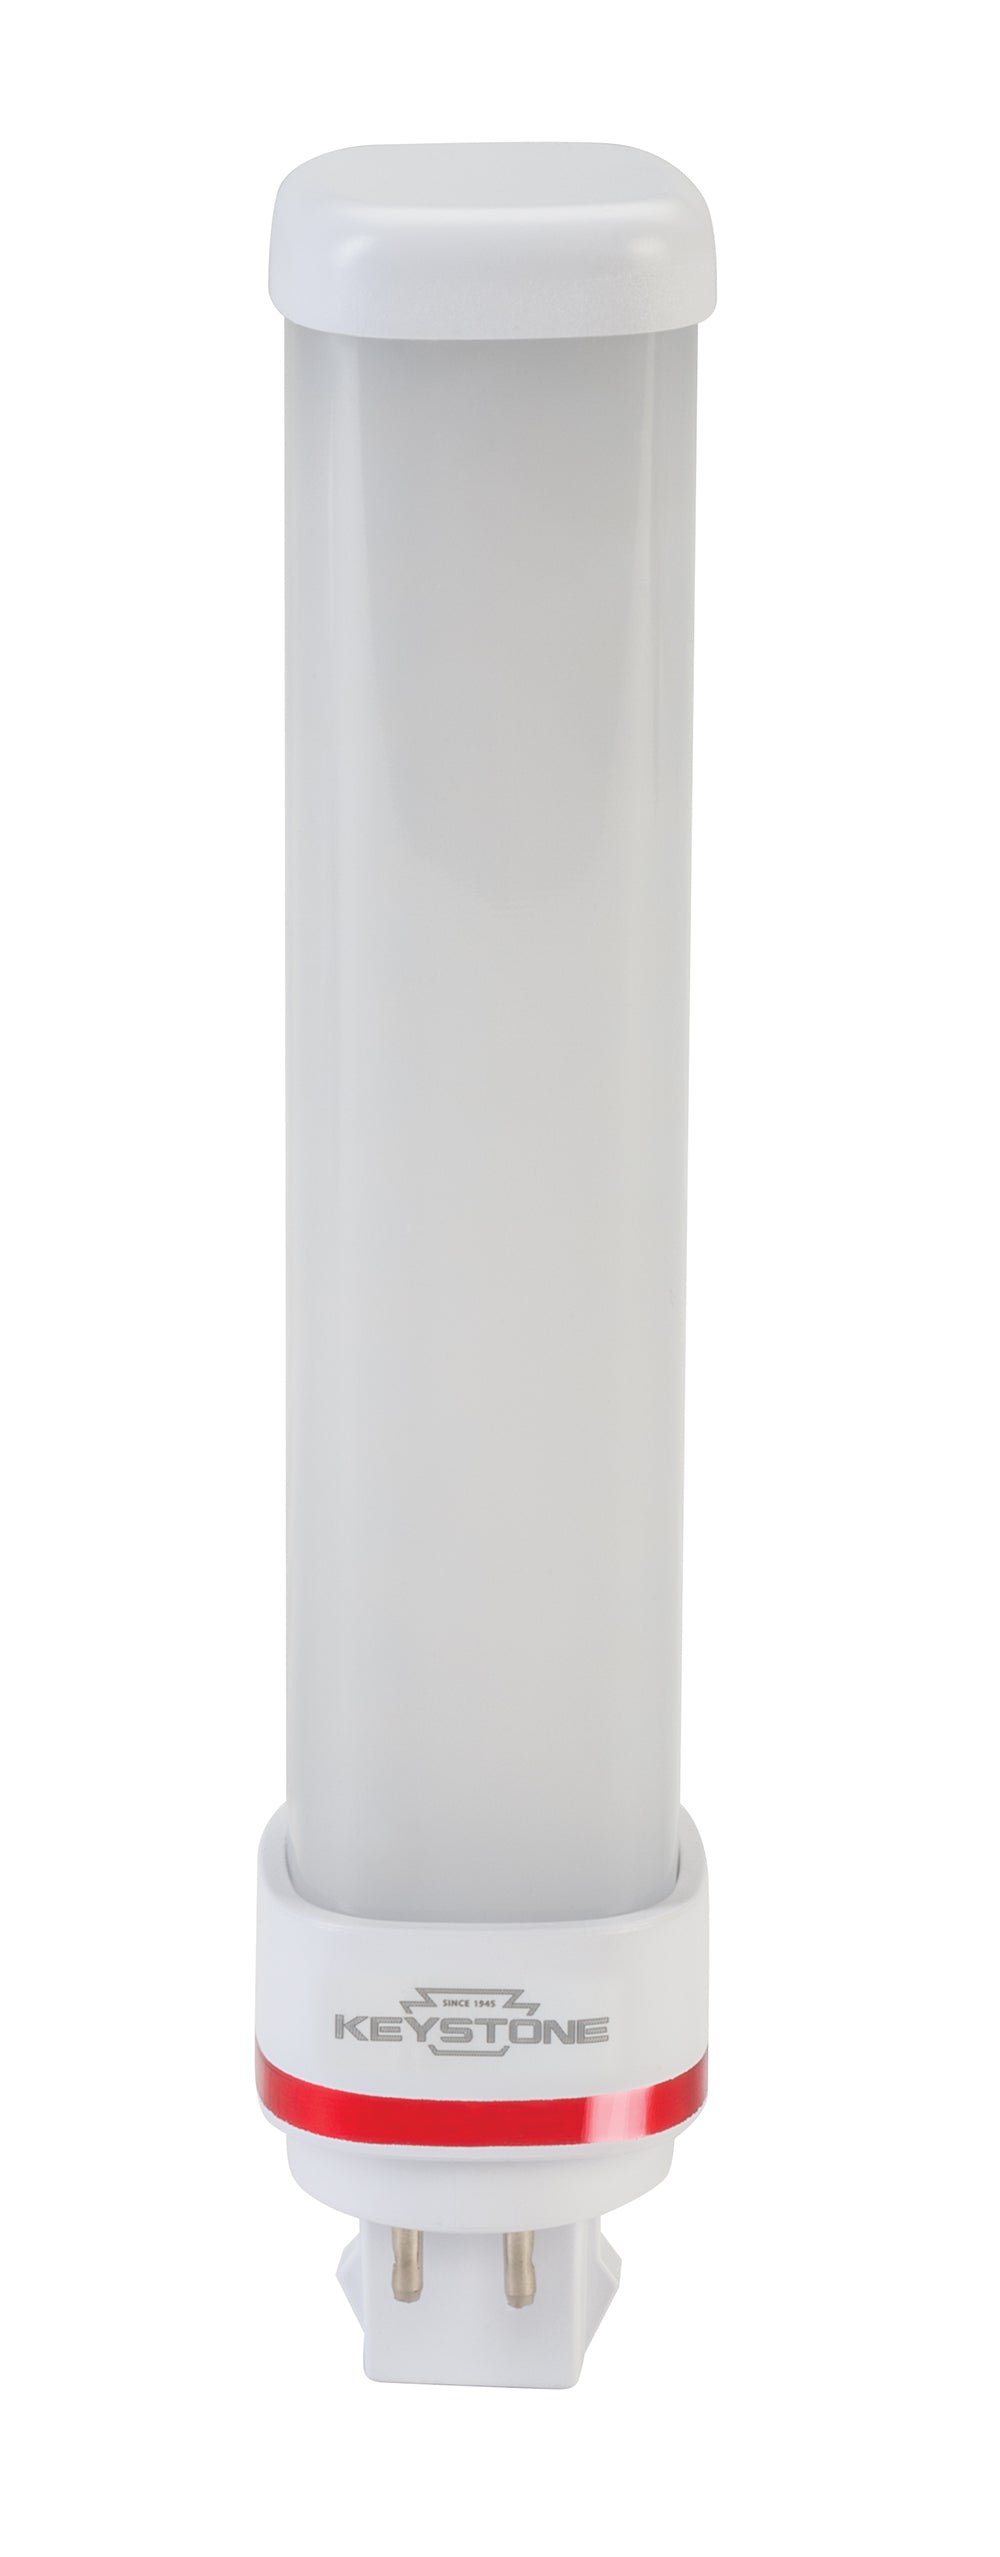 9W LED 4-Pin Compact Lamp, Horizontal Orientation, Ballast Compatible, G24q Base, 3500K, 6 pcs cartons, Individually Sleeved (Pack of 24)